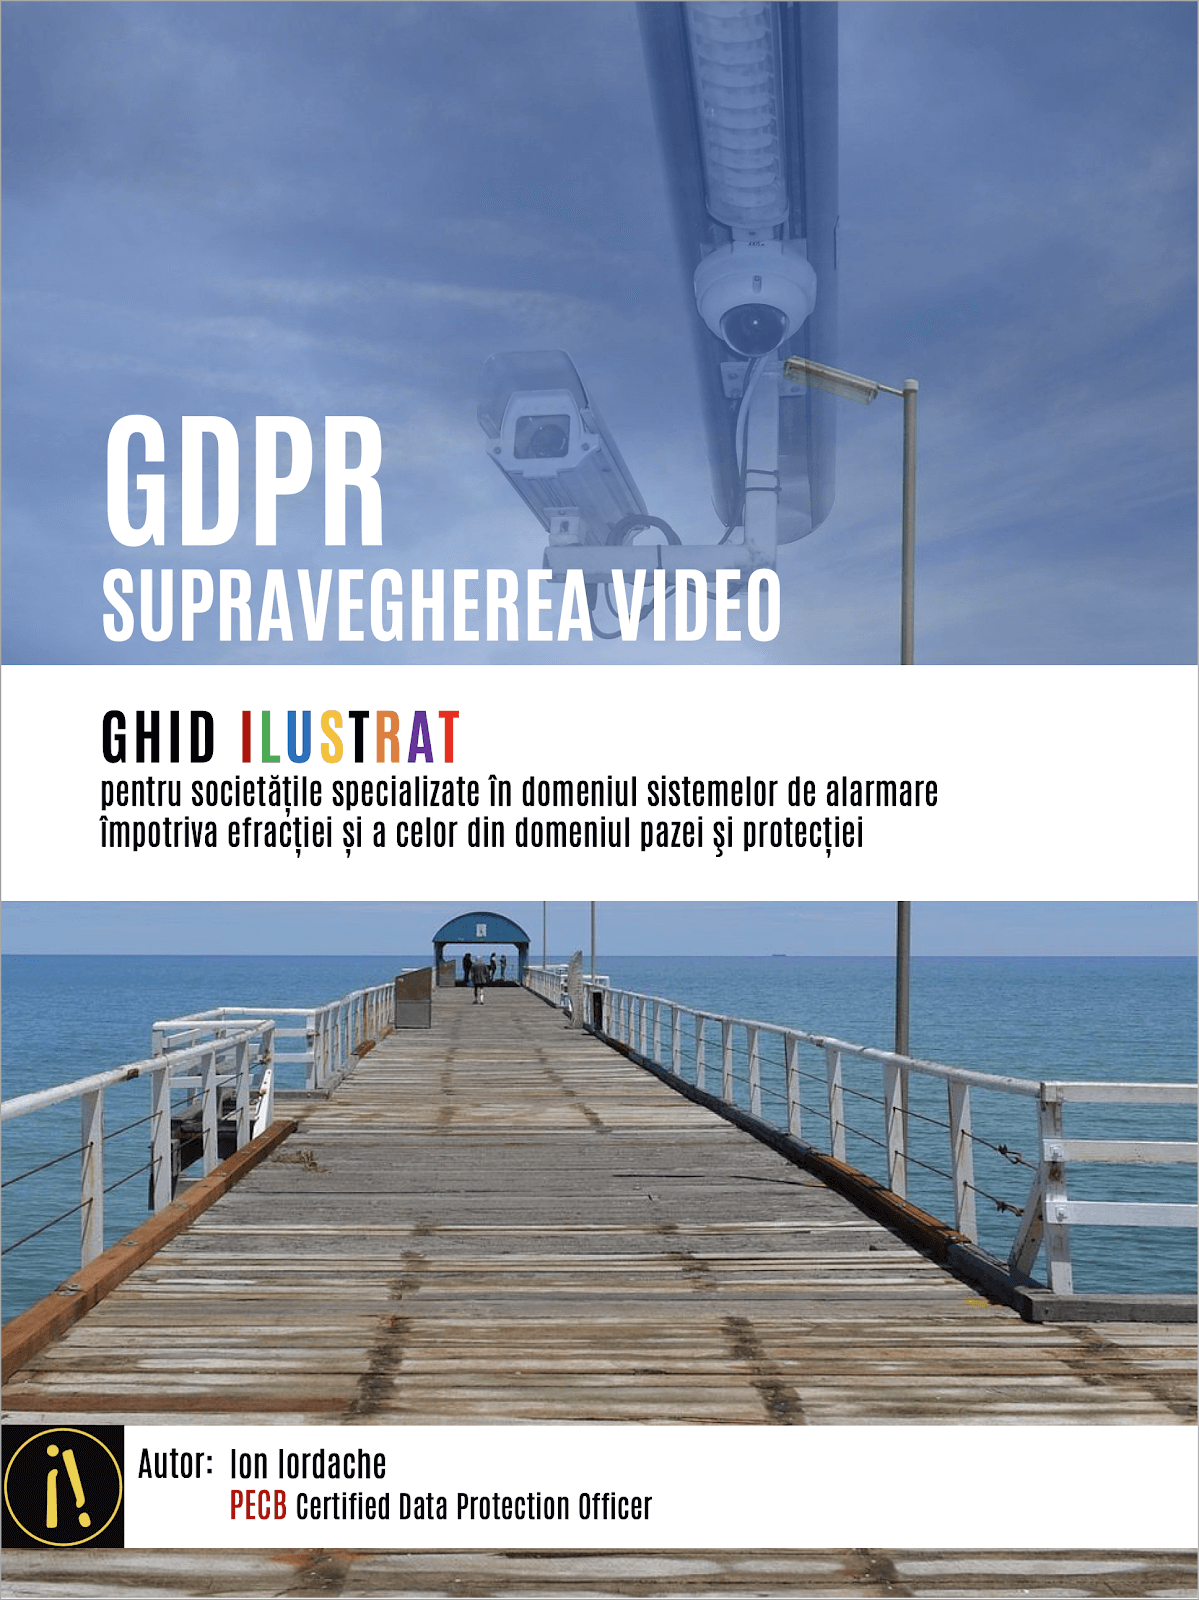 GDPR - SUPRAVEGHEREA VIDEO